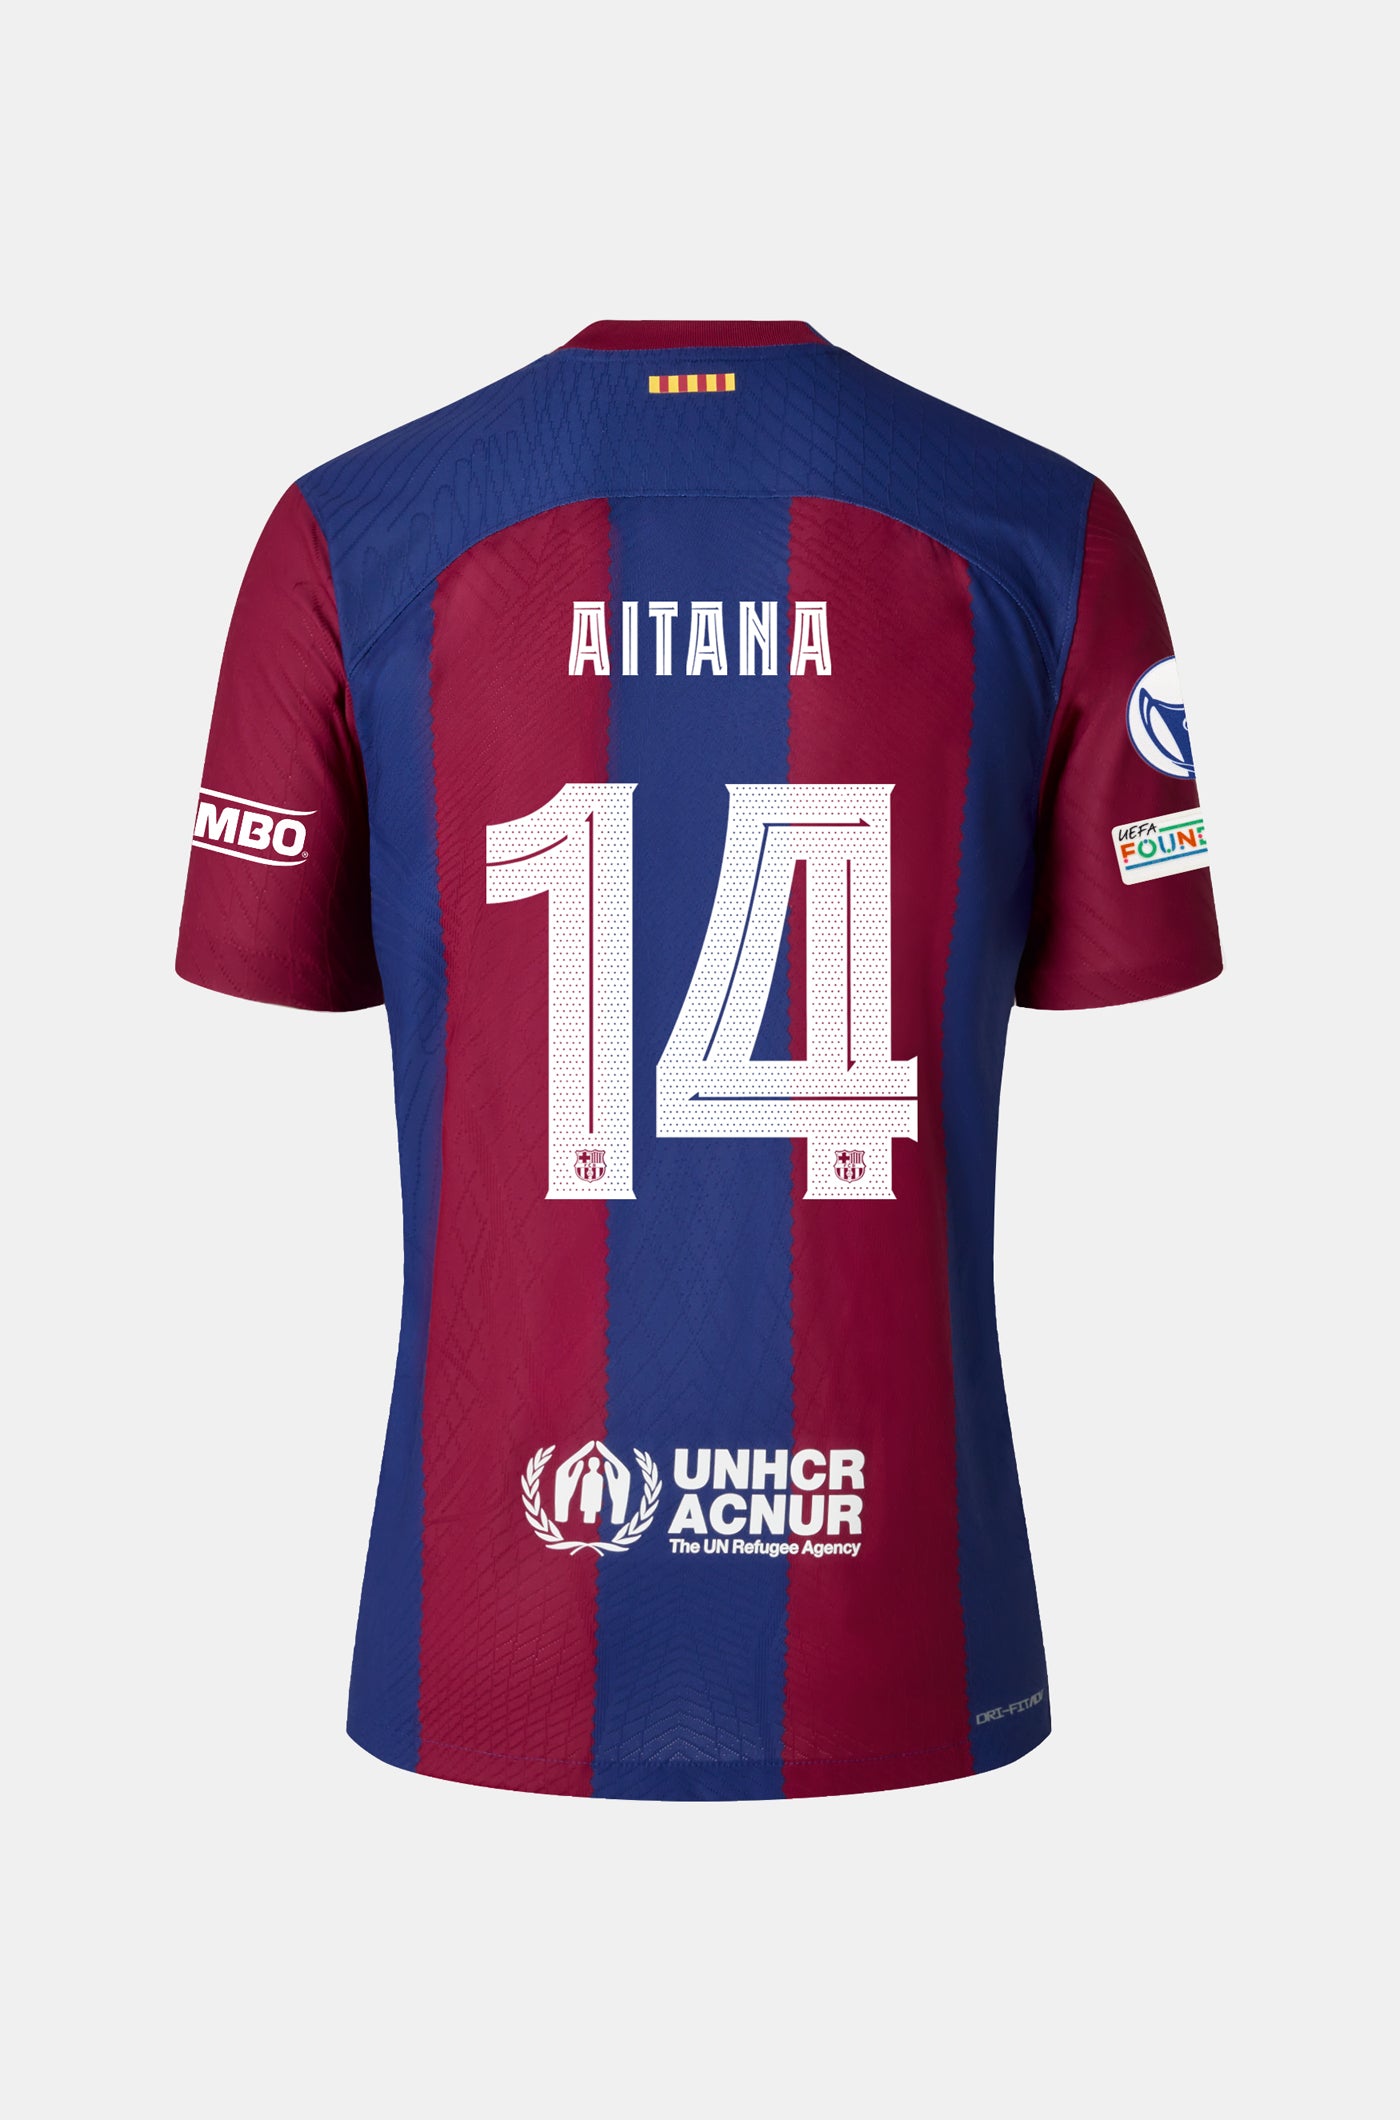 UWCL FC Barcelona Home Shirt 23/24 Player's Edition - Women - AITANA